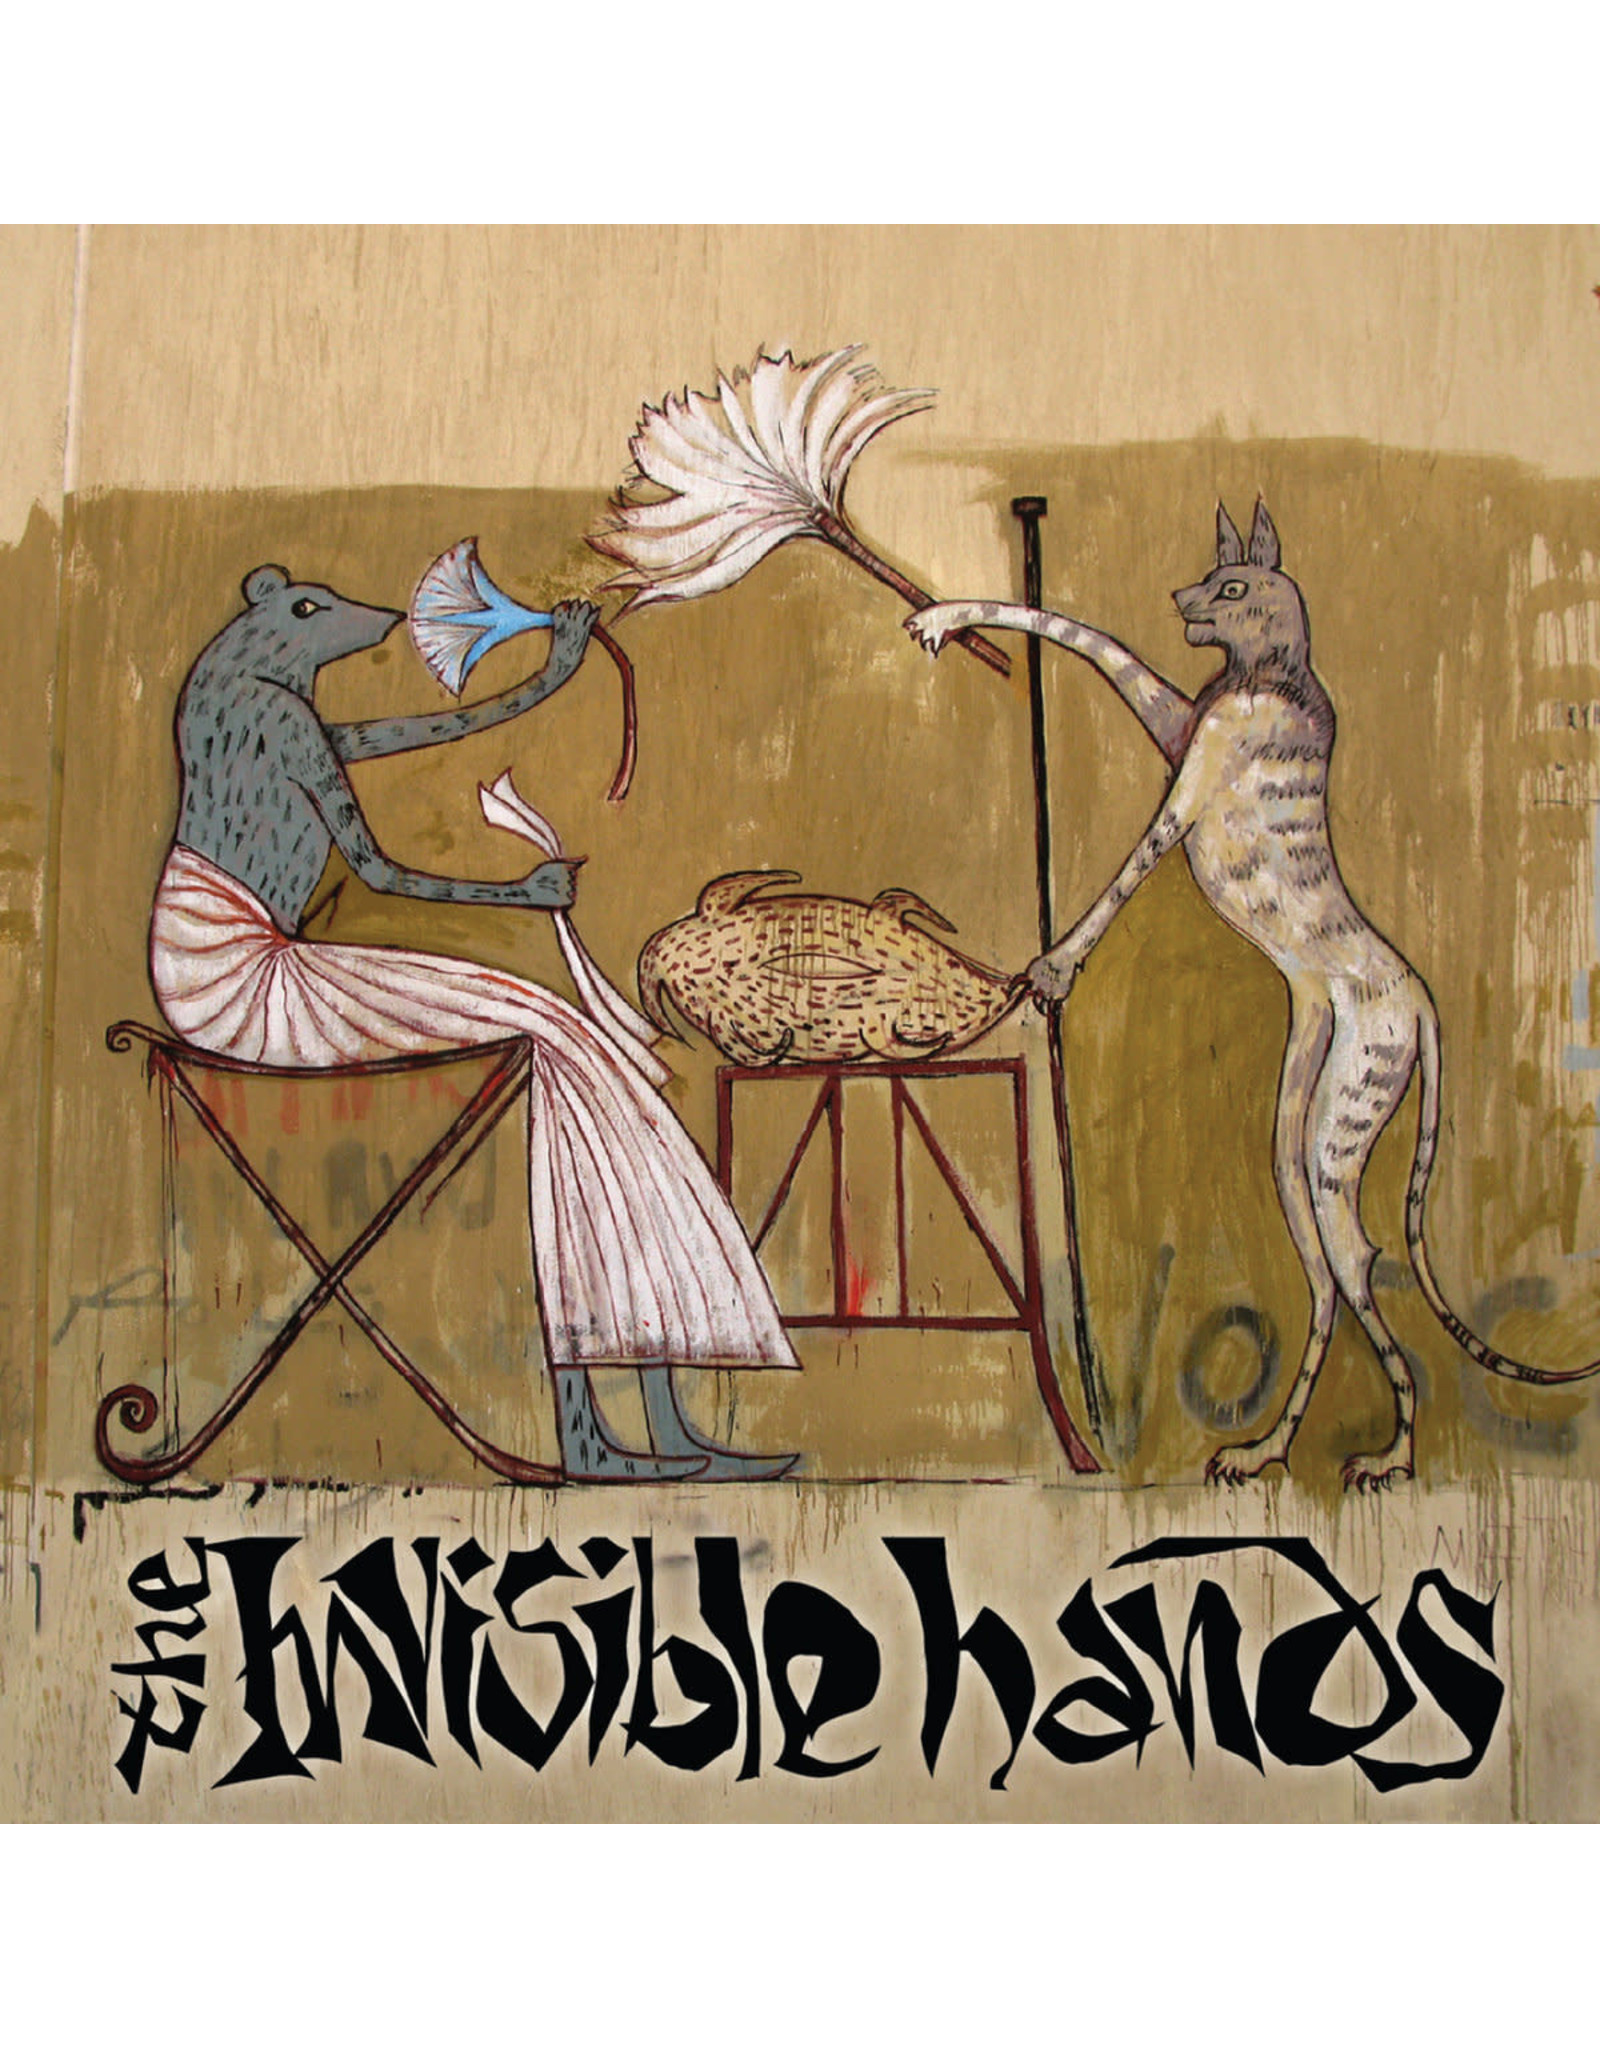 Abduction Invisible Hands: s/t LP